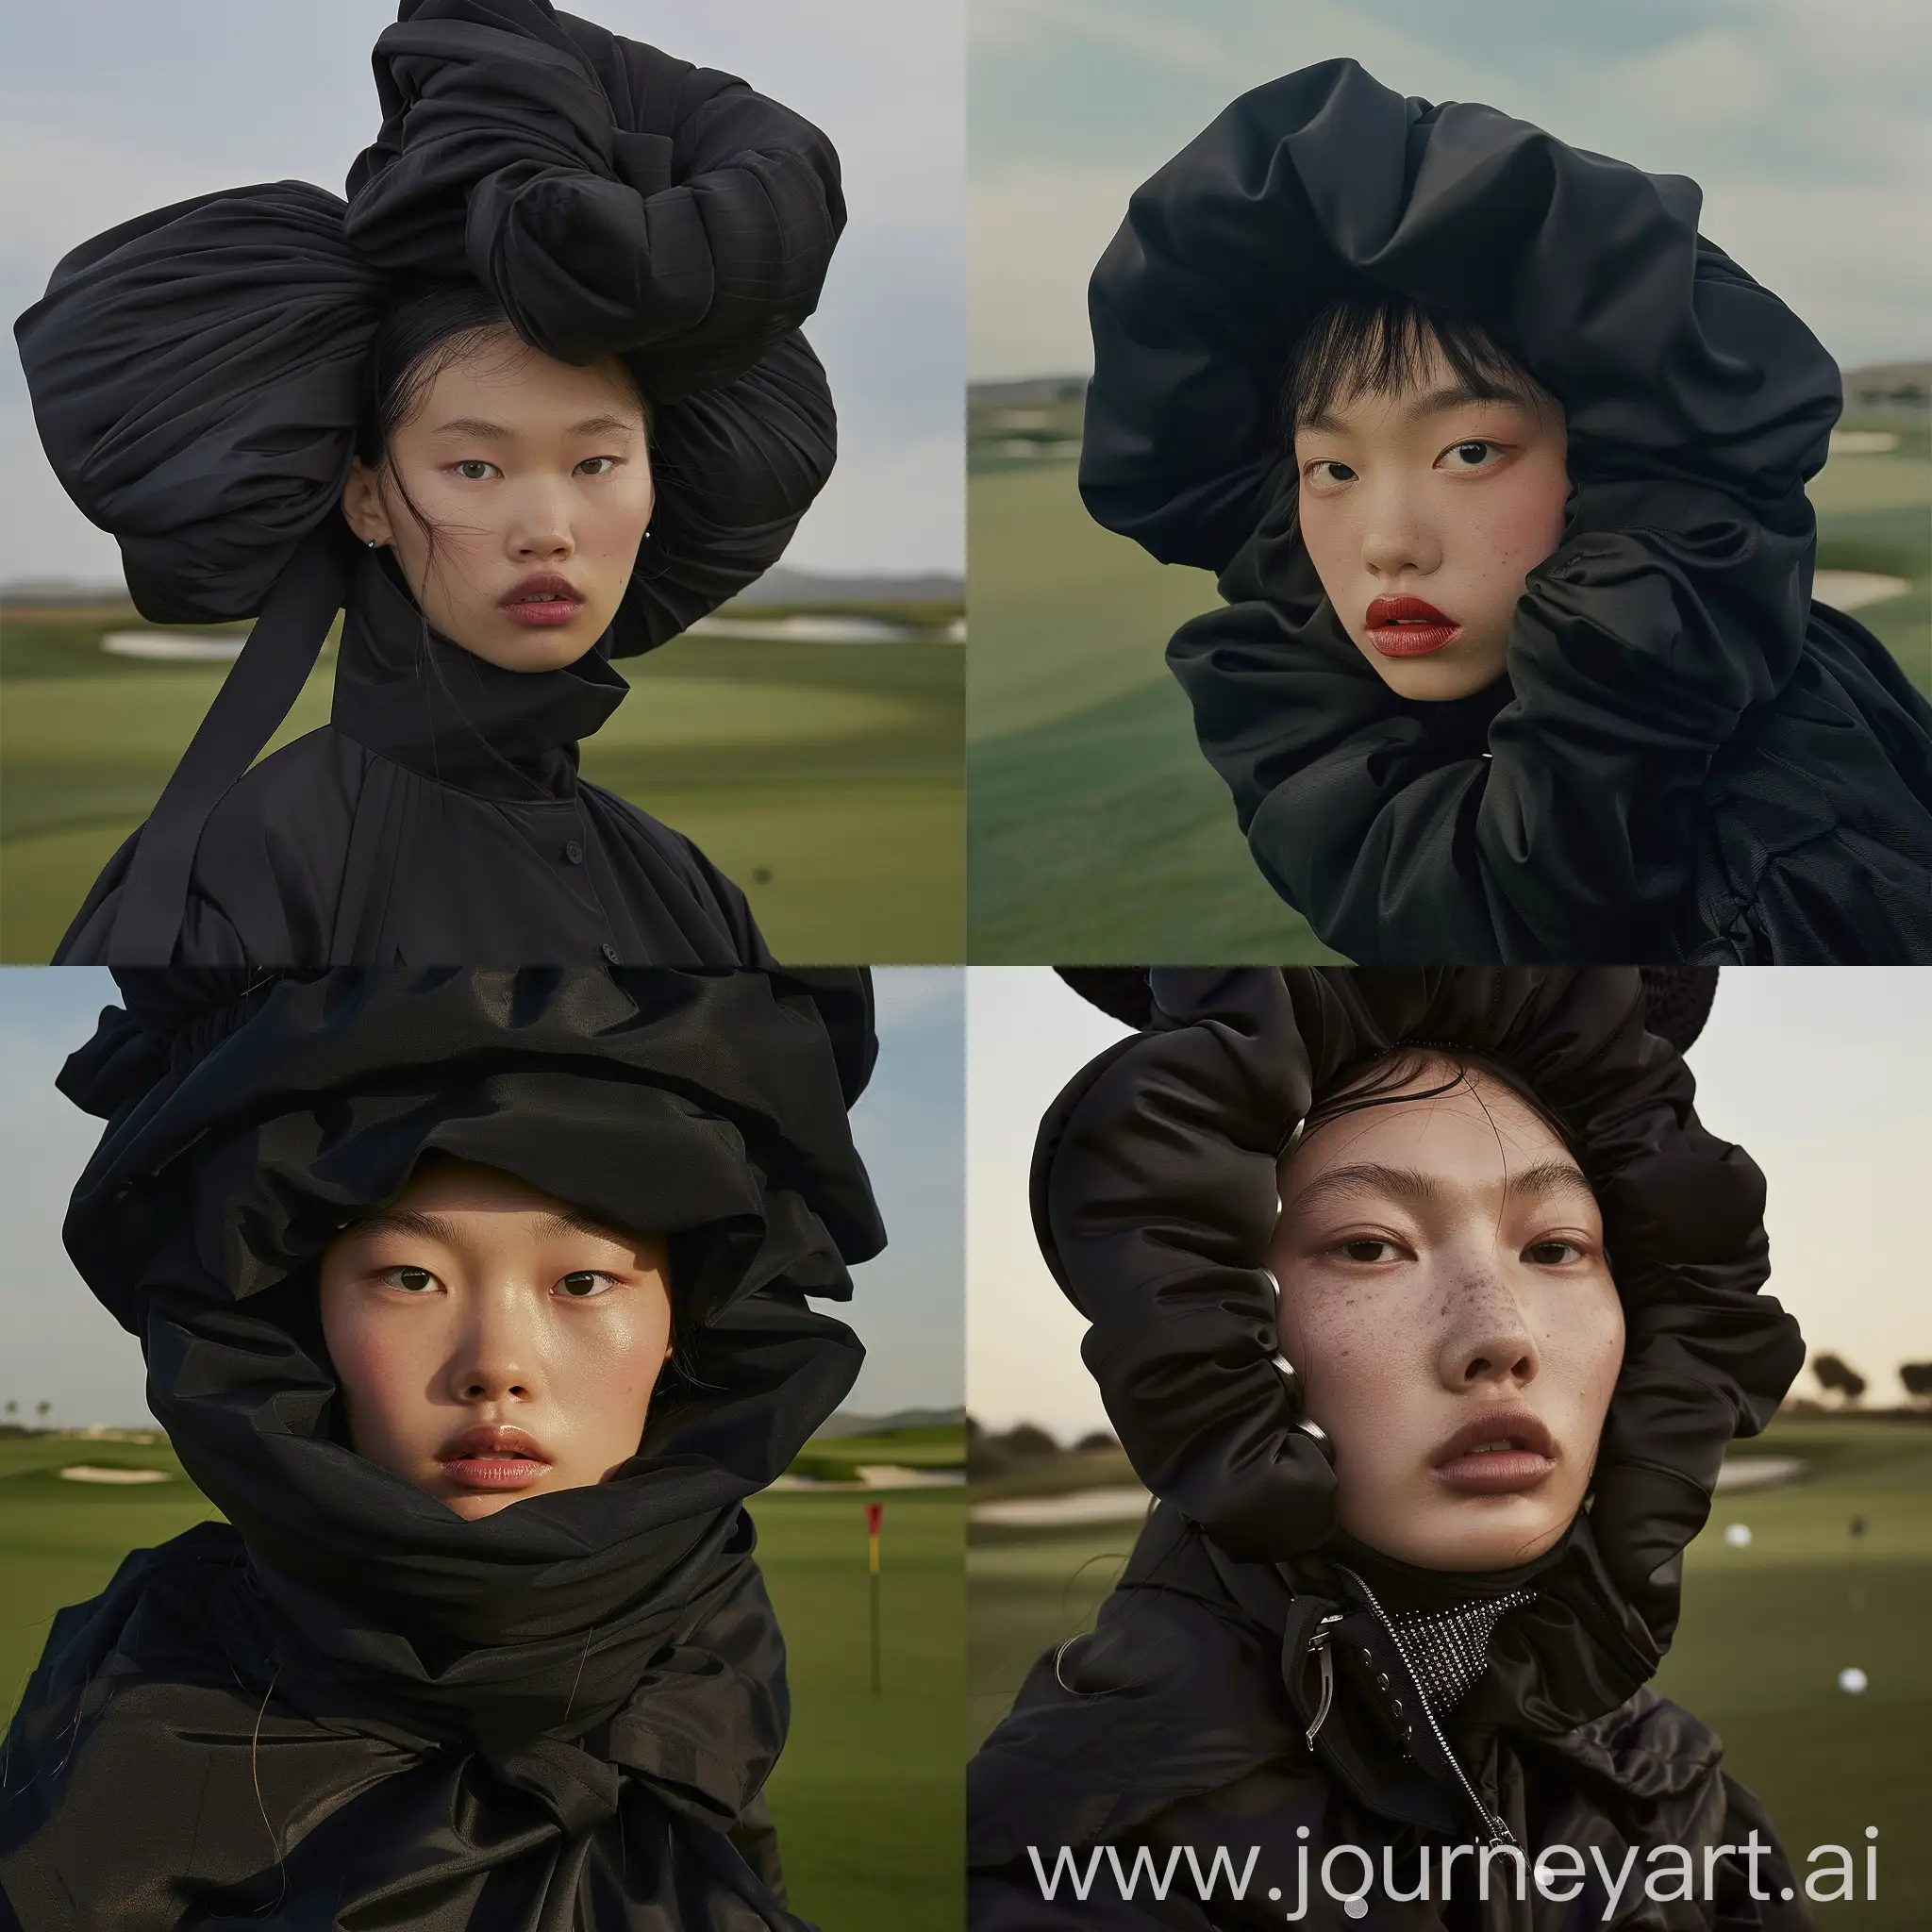 Oriental-Balenciaga-Model-Showcases-Unique-Oversized-Black-Fashion-on-Golf-Course